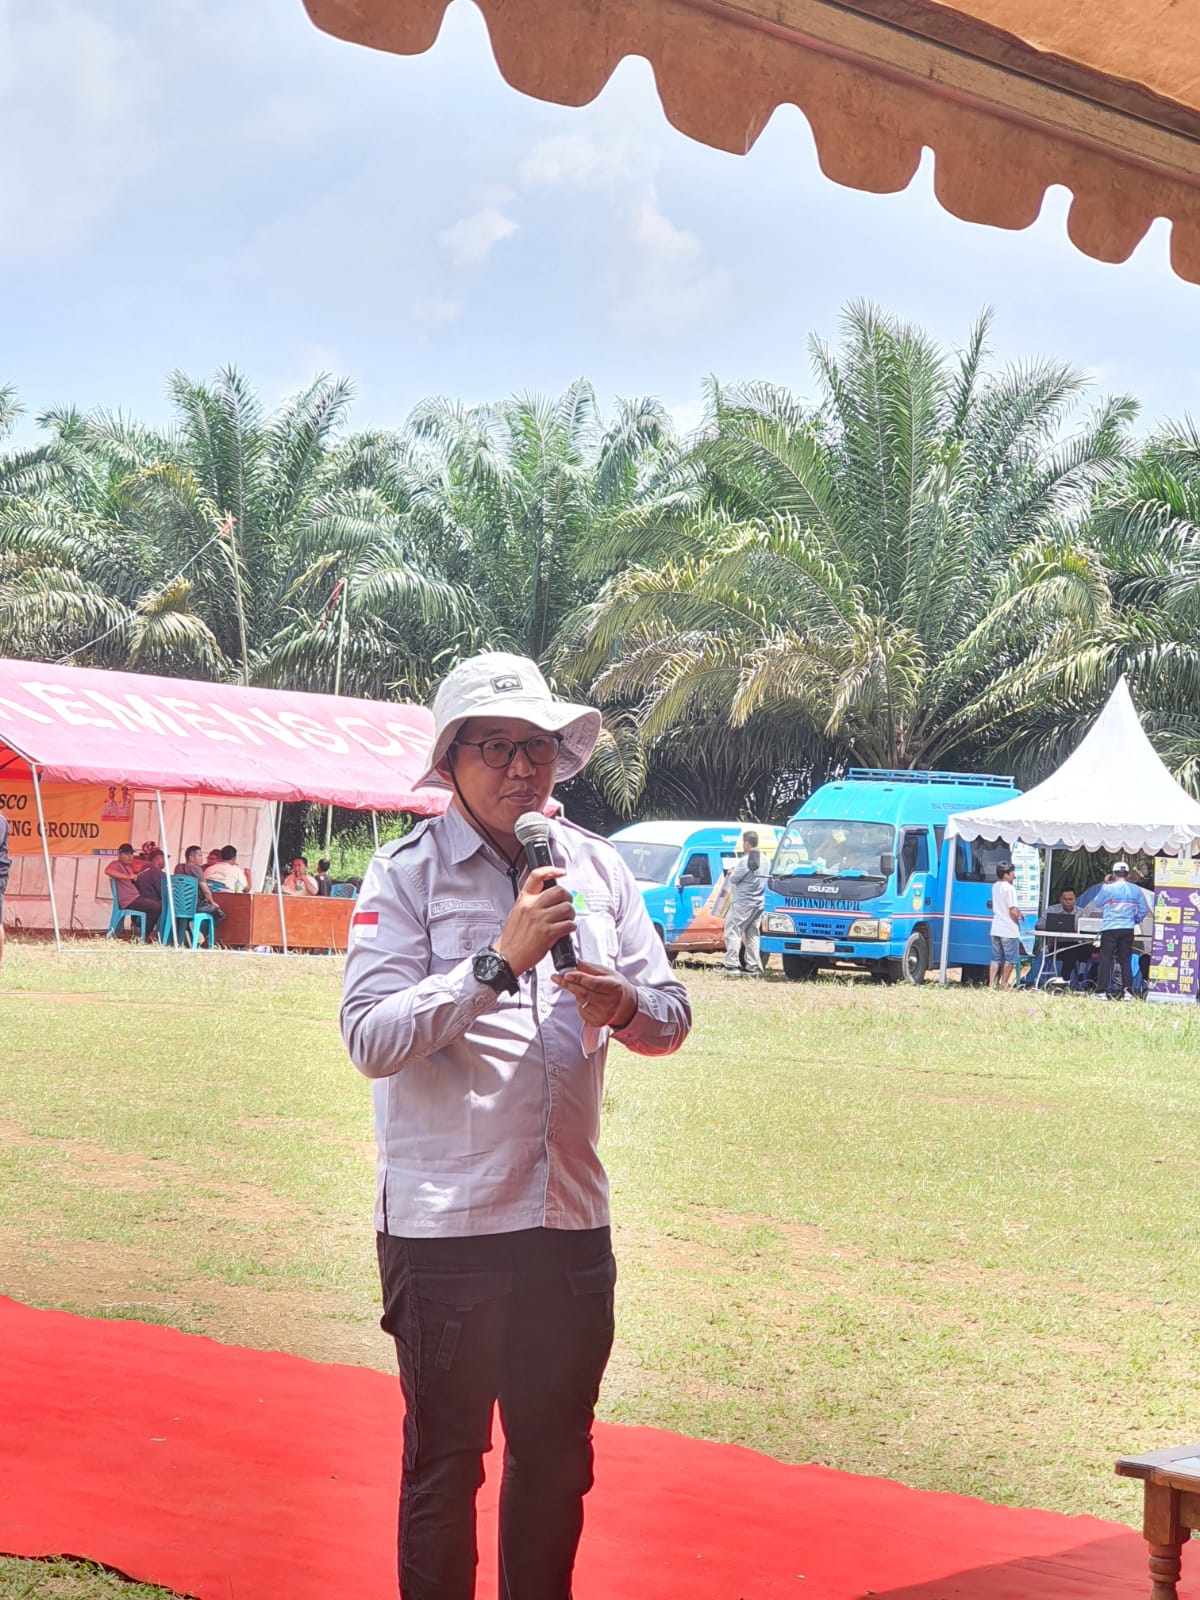 Dinas Kesehatan mengadakan Screening Kesehatan Jiwa di Camping Ground Sangir Balai Janggo